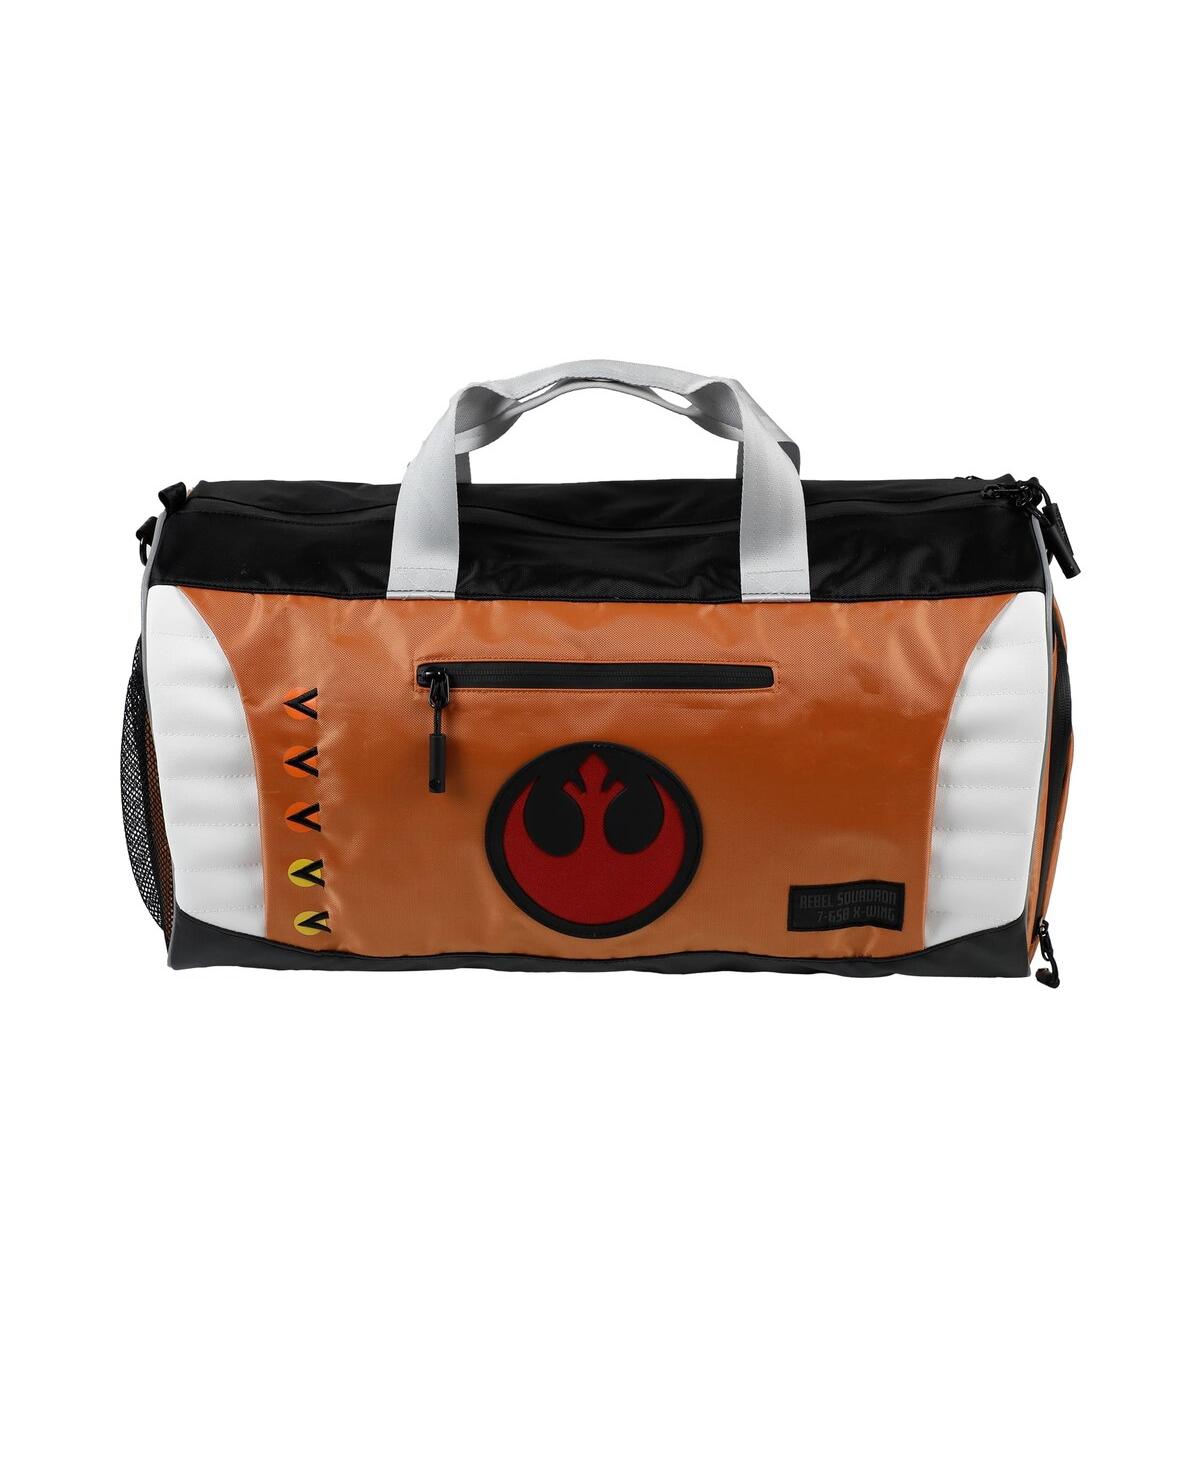 Men's and Women's Star Wars Rebel Alliance Pilot Duffle Bag - Orange